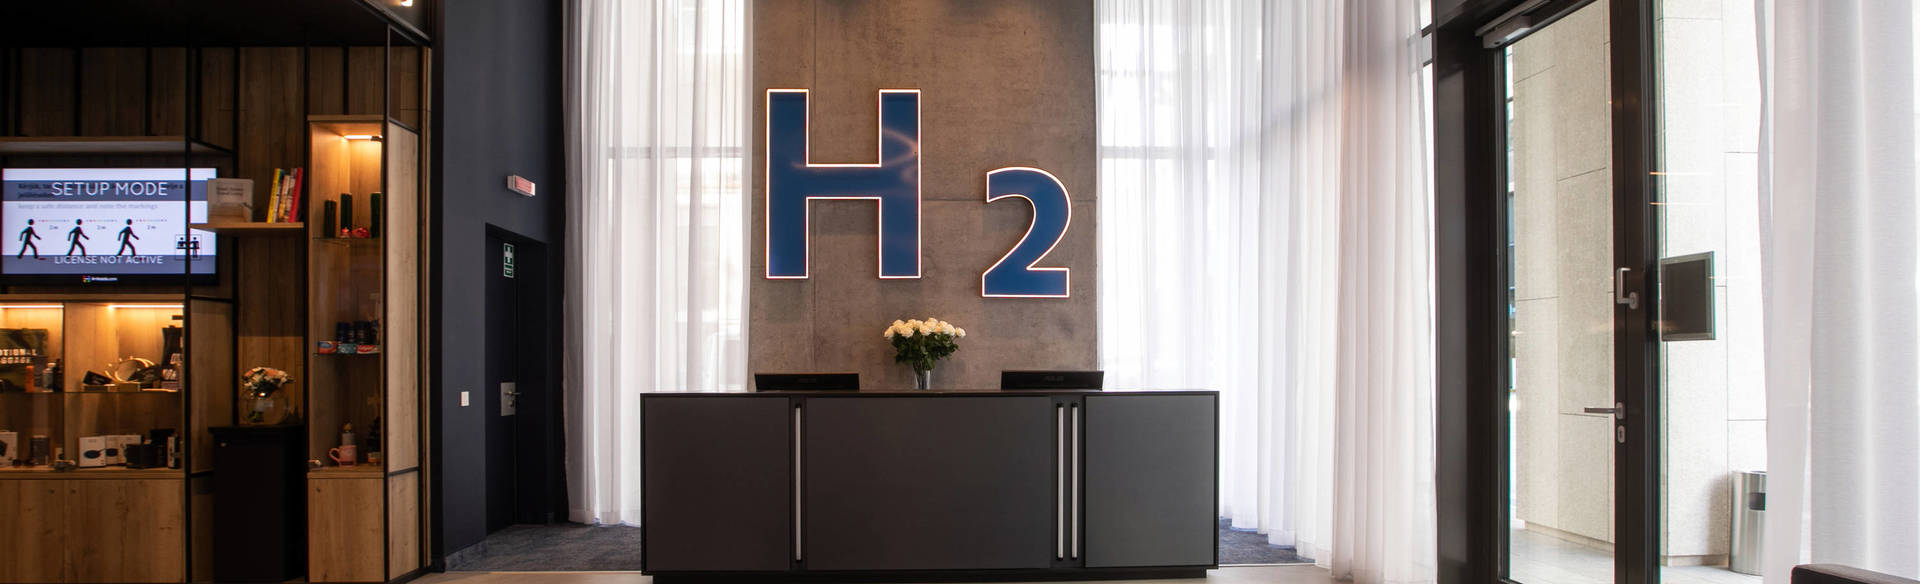 Vélemények: H2 Hotel Budapest